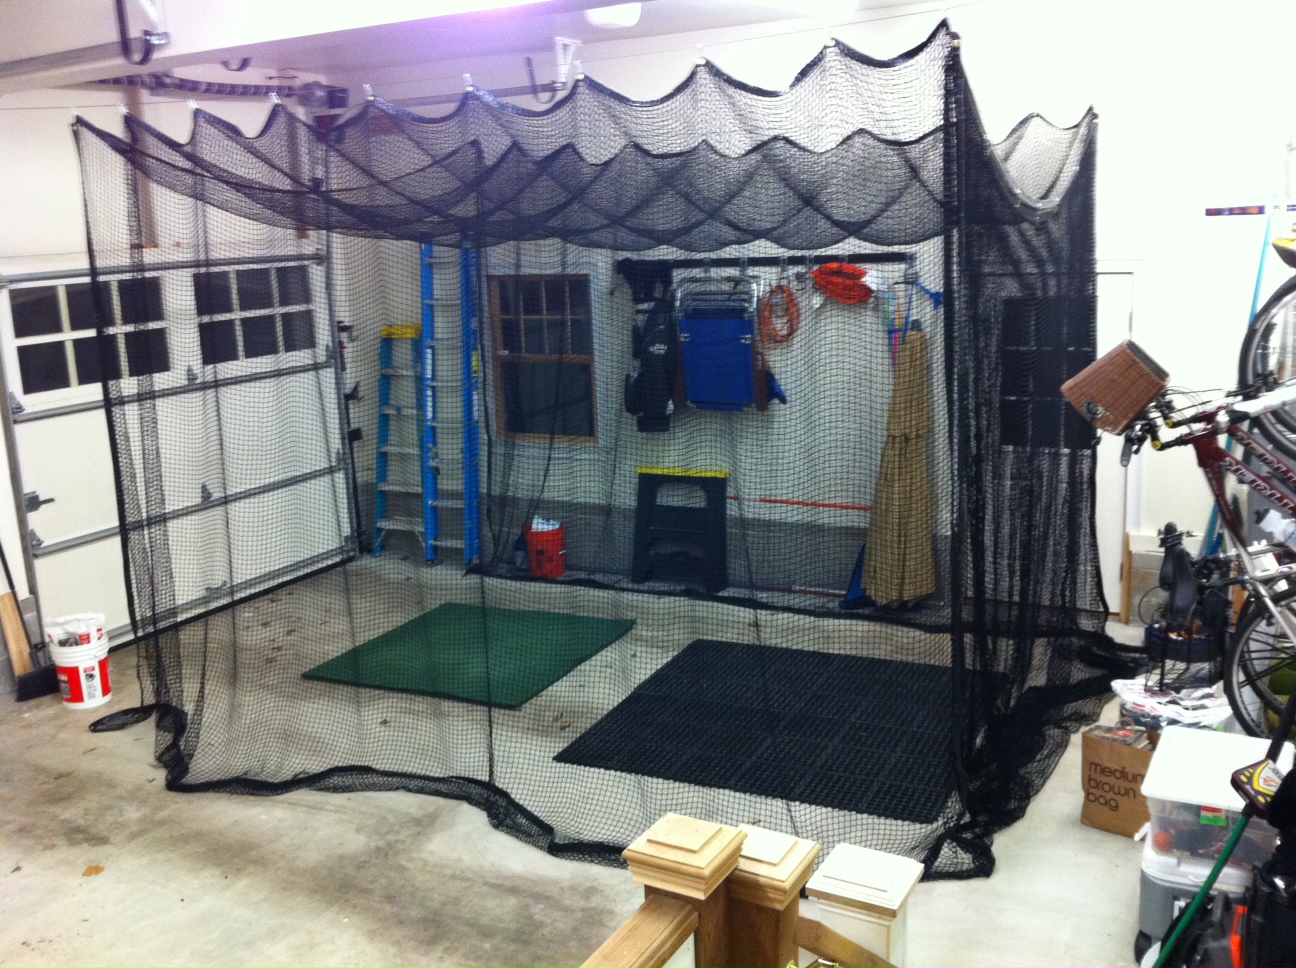 Diy Batting Cage In Garage, Diy Batting Cage In Garage